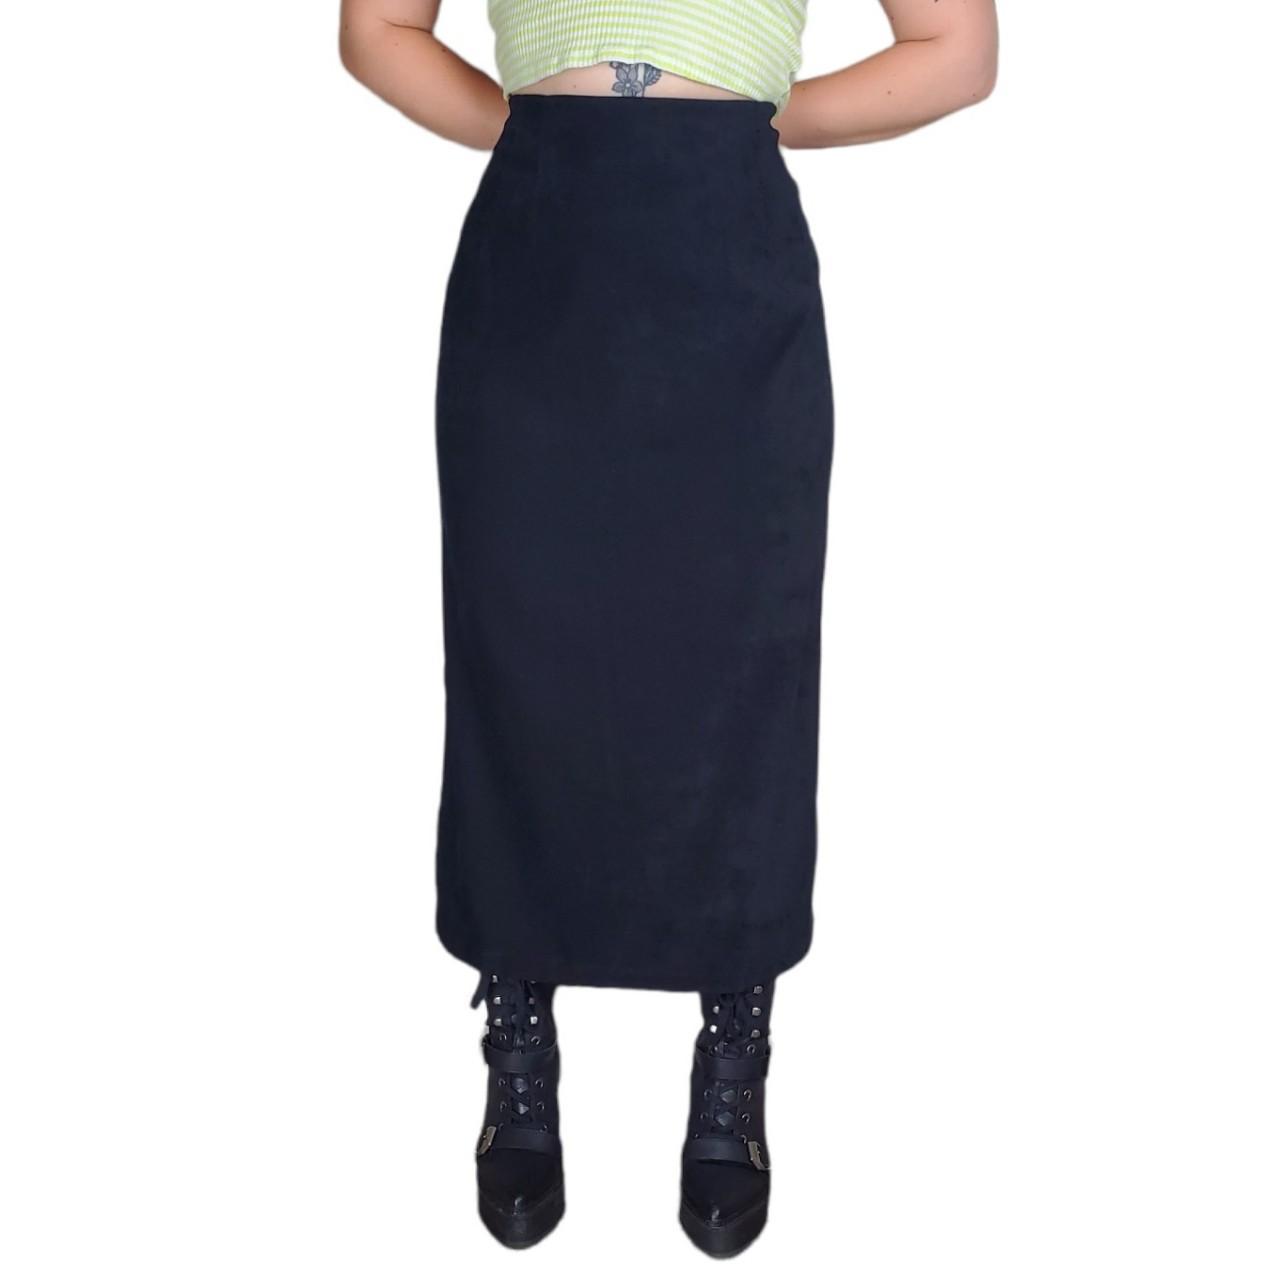 Product Image 1 - 90's black midi skirt 
-Size